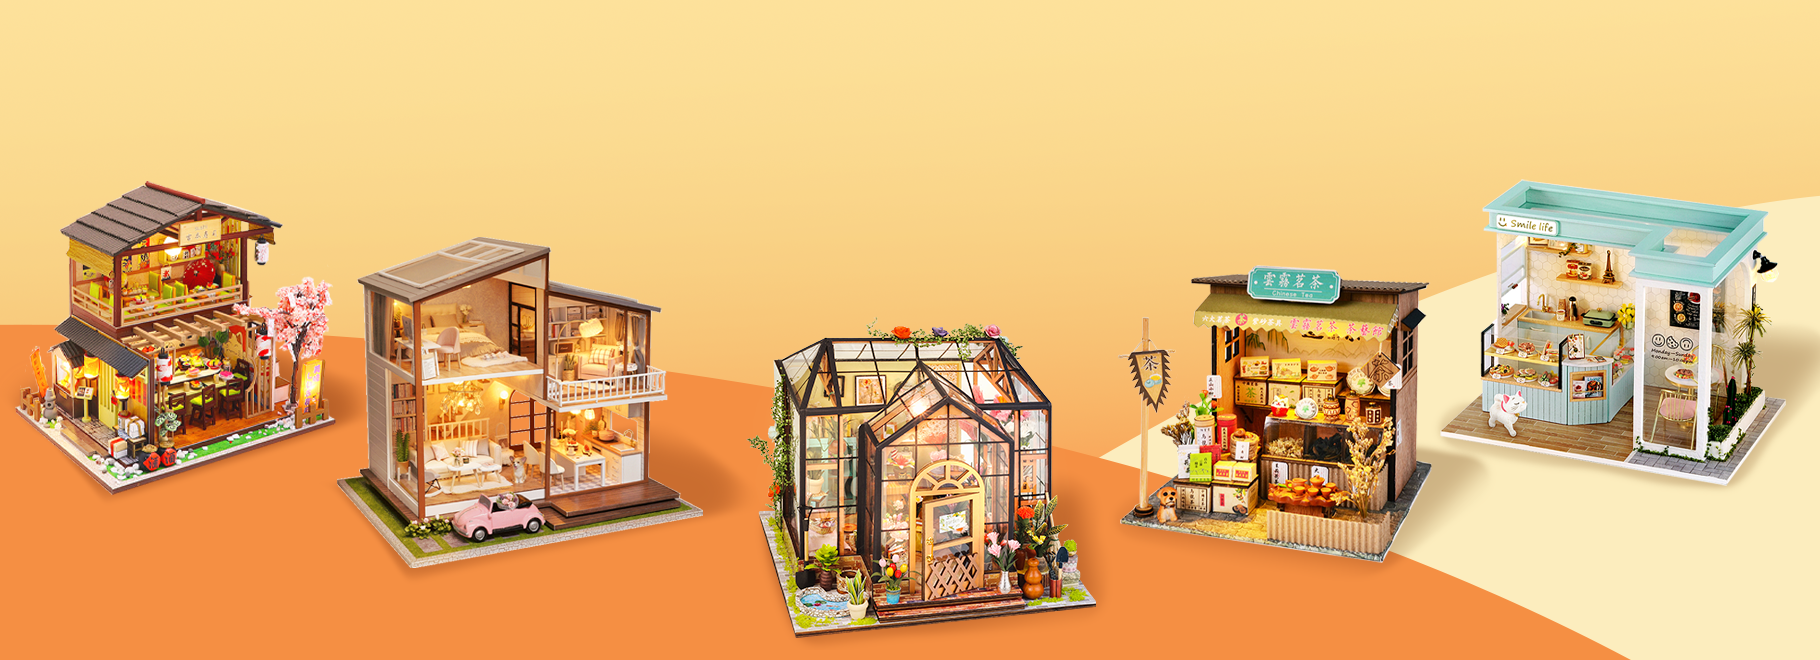 Rolife Alice's Tea Store DIY Miniature House Kit – Sparetime